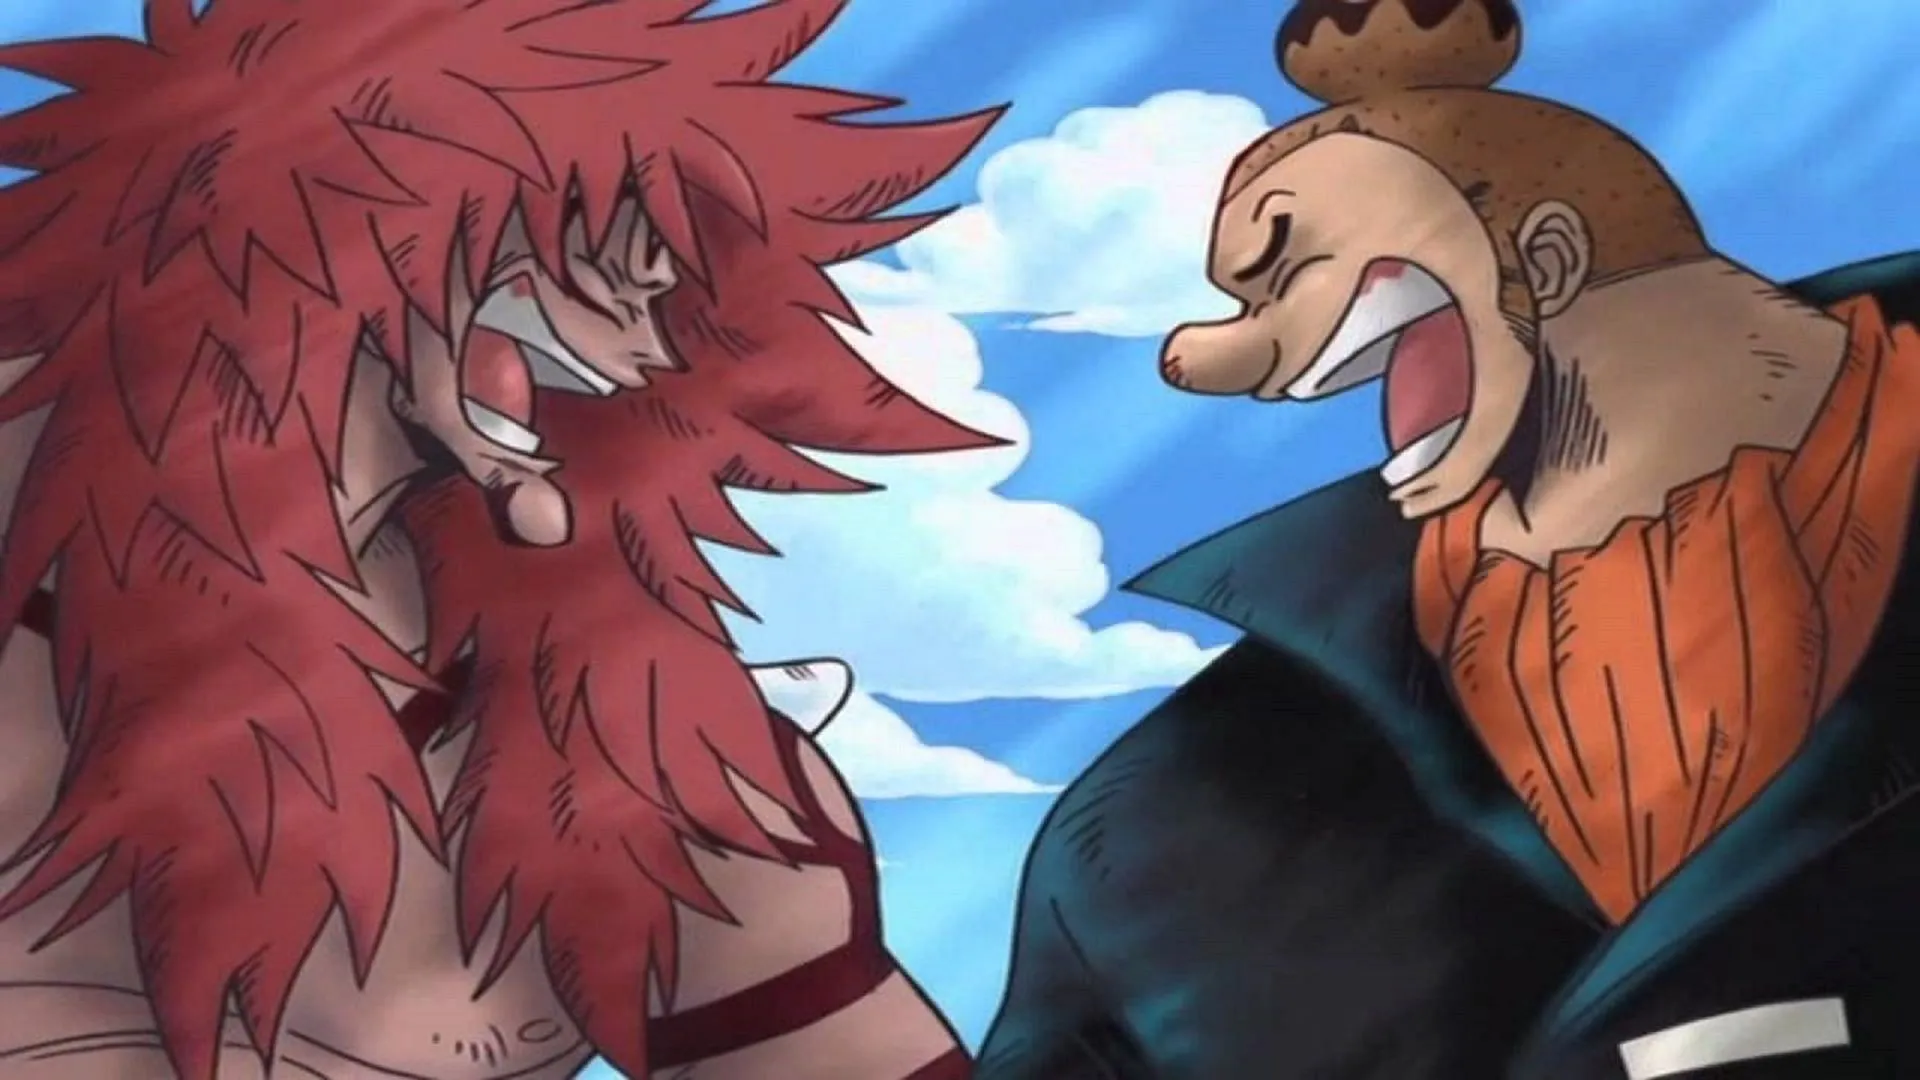 Kalgara and Noland (Toei Animation, One Piece를 통한 이미지)